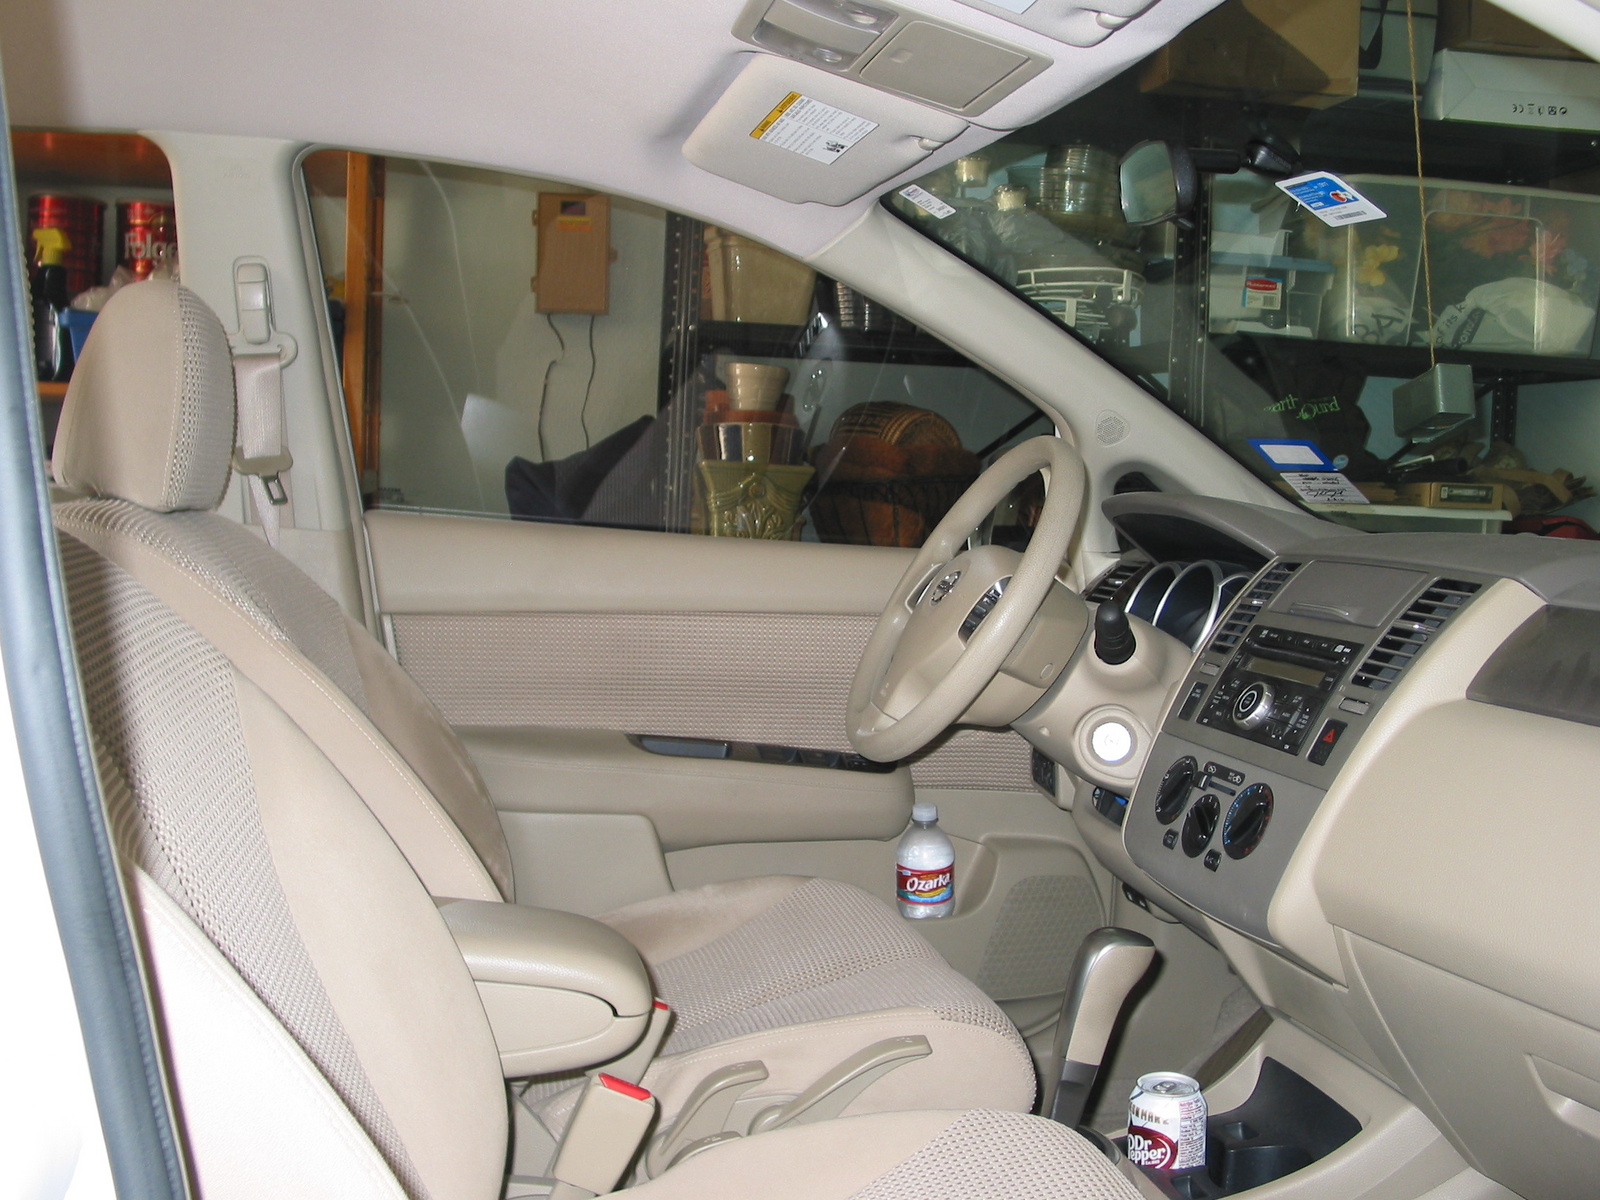 2010 Nissan versa interior dimensions #3